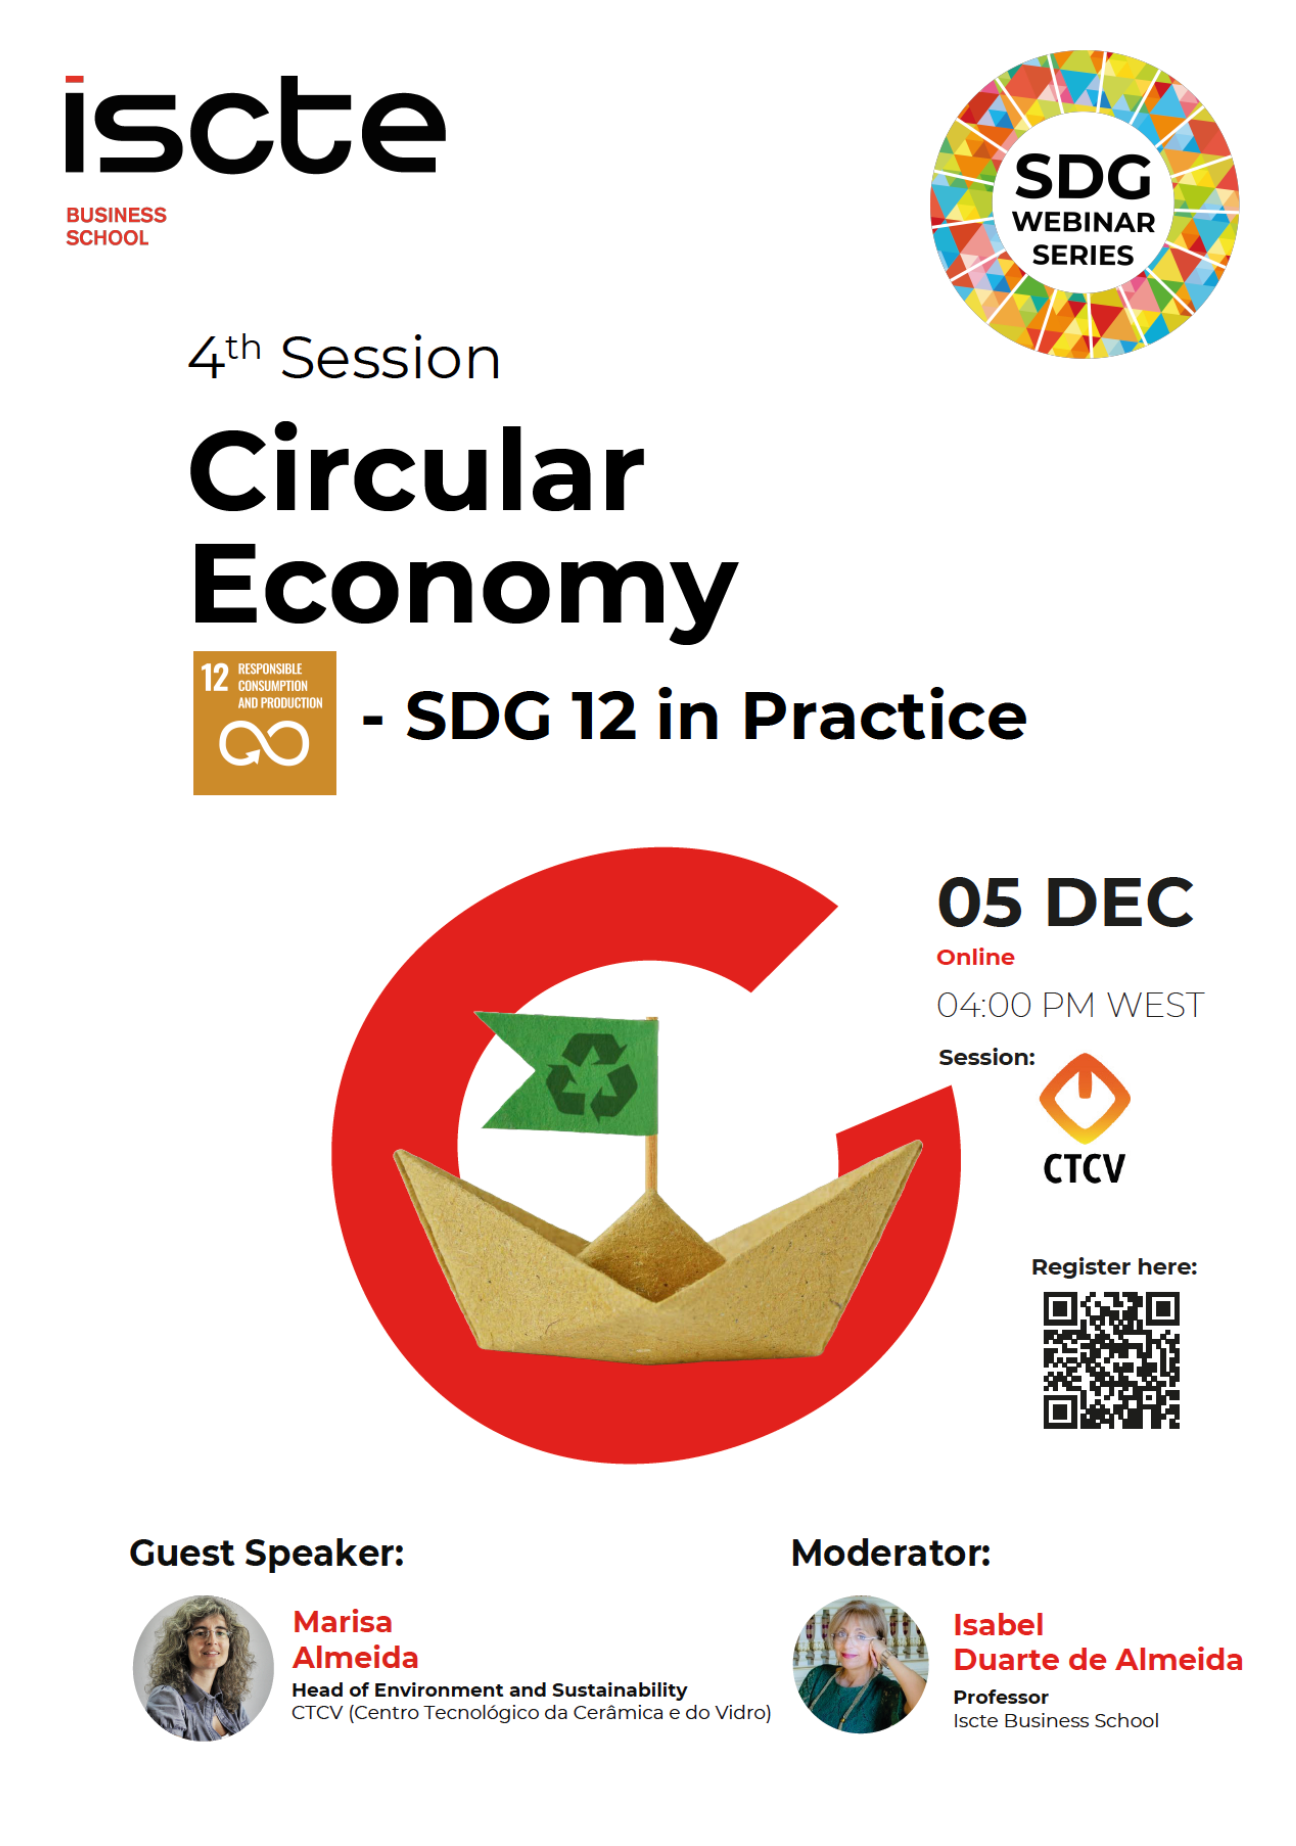 SDG Webinar Series - Circular Economy - SDG 12 in Practice